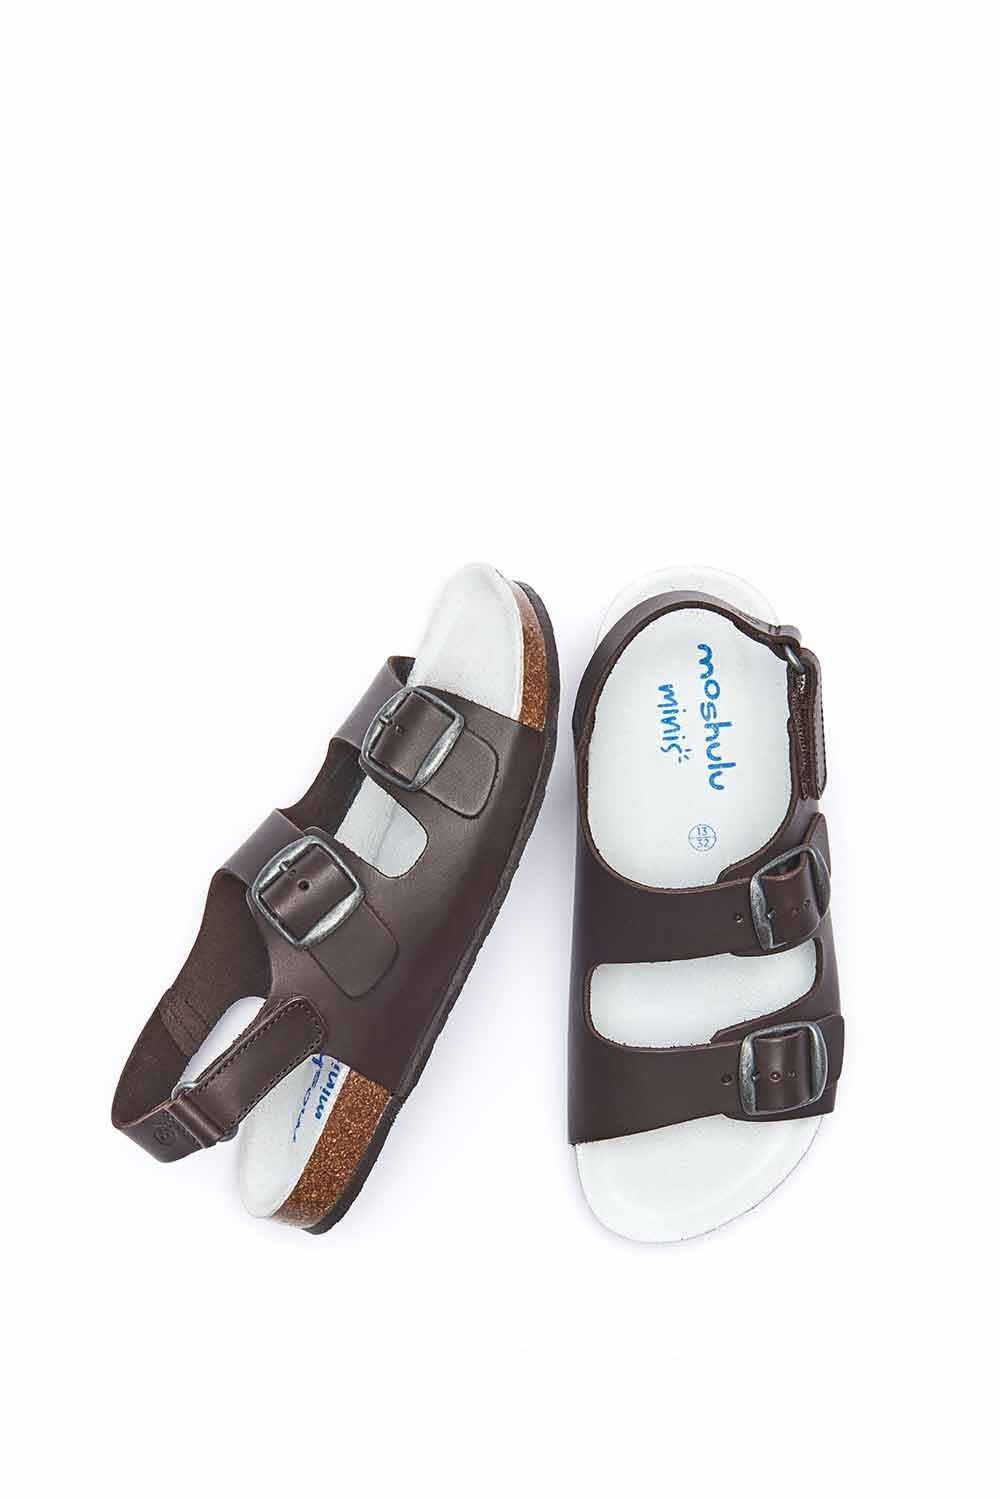 ’Mini Palme Waxy’ Cork Footbed Sandals